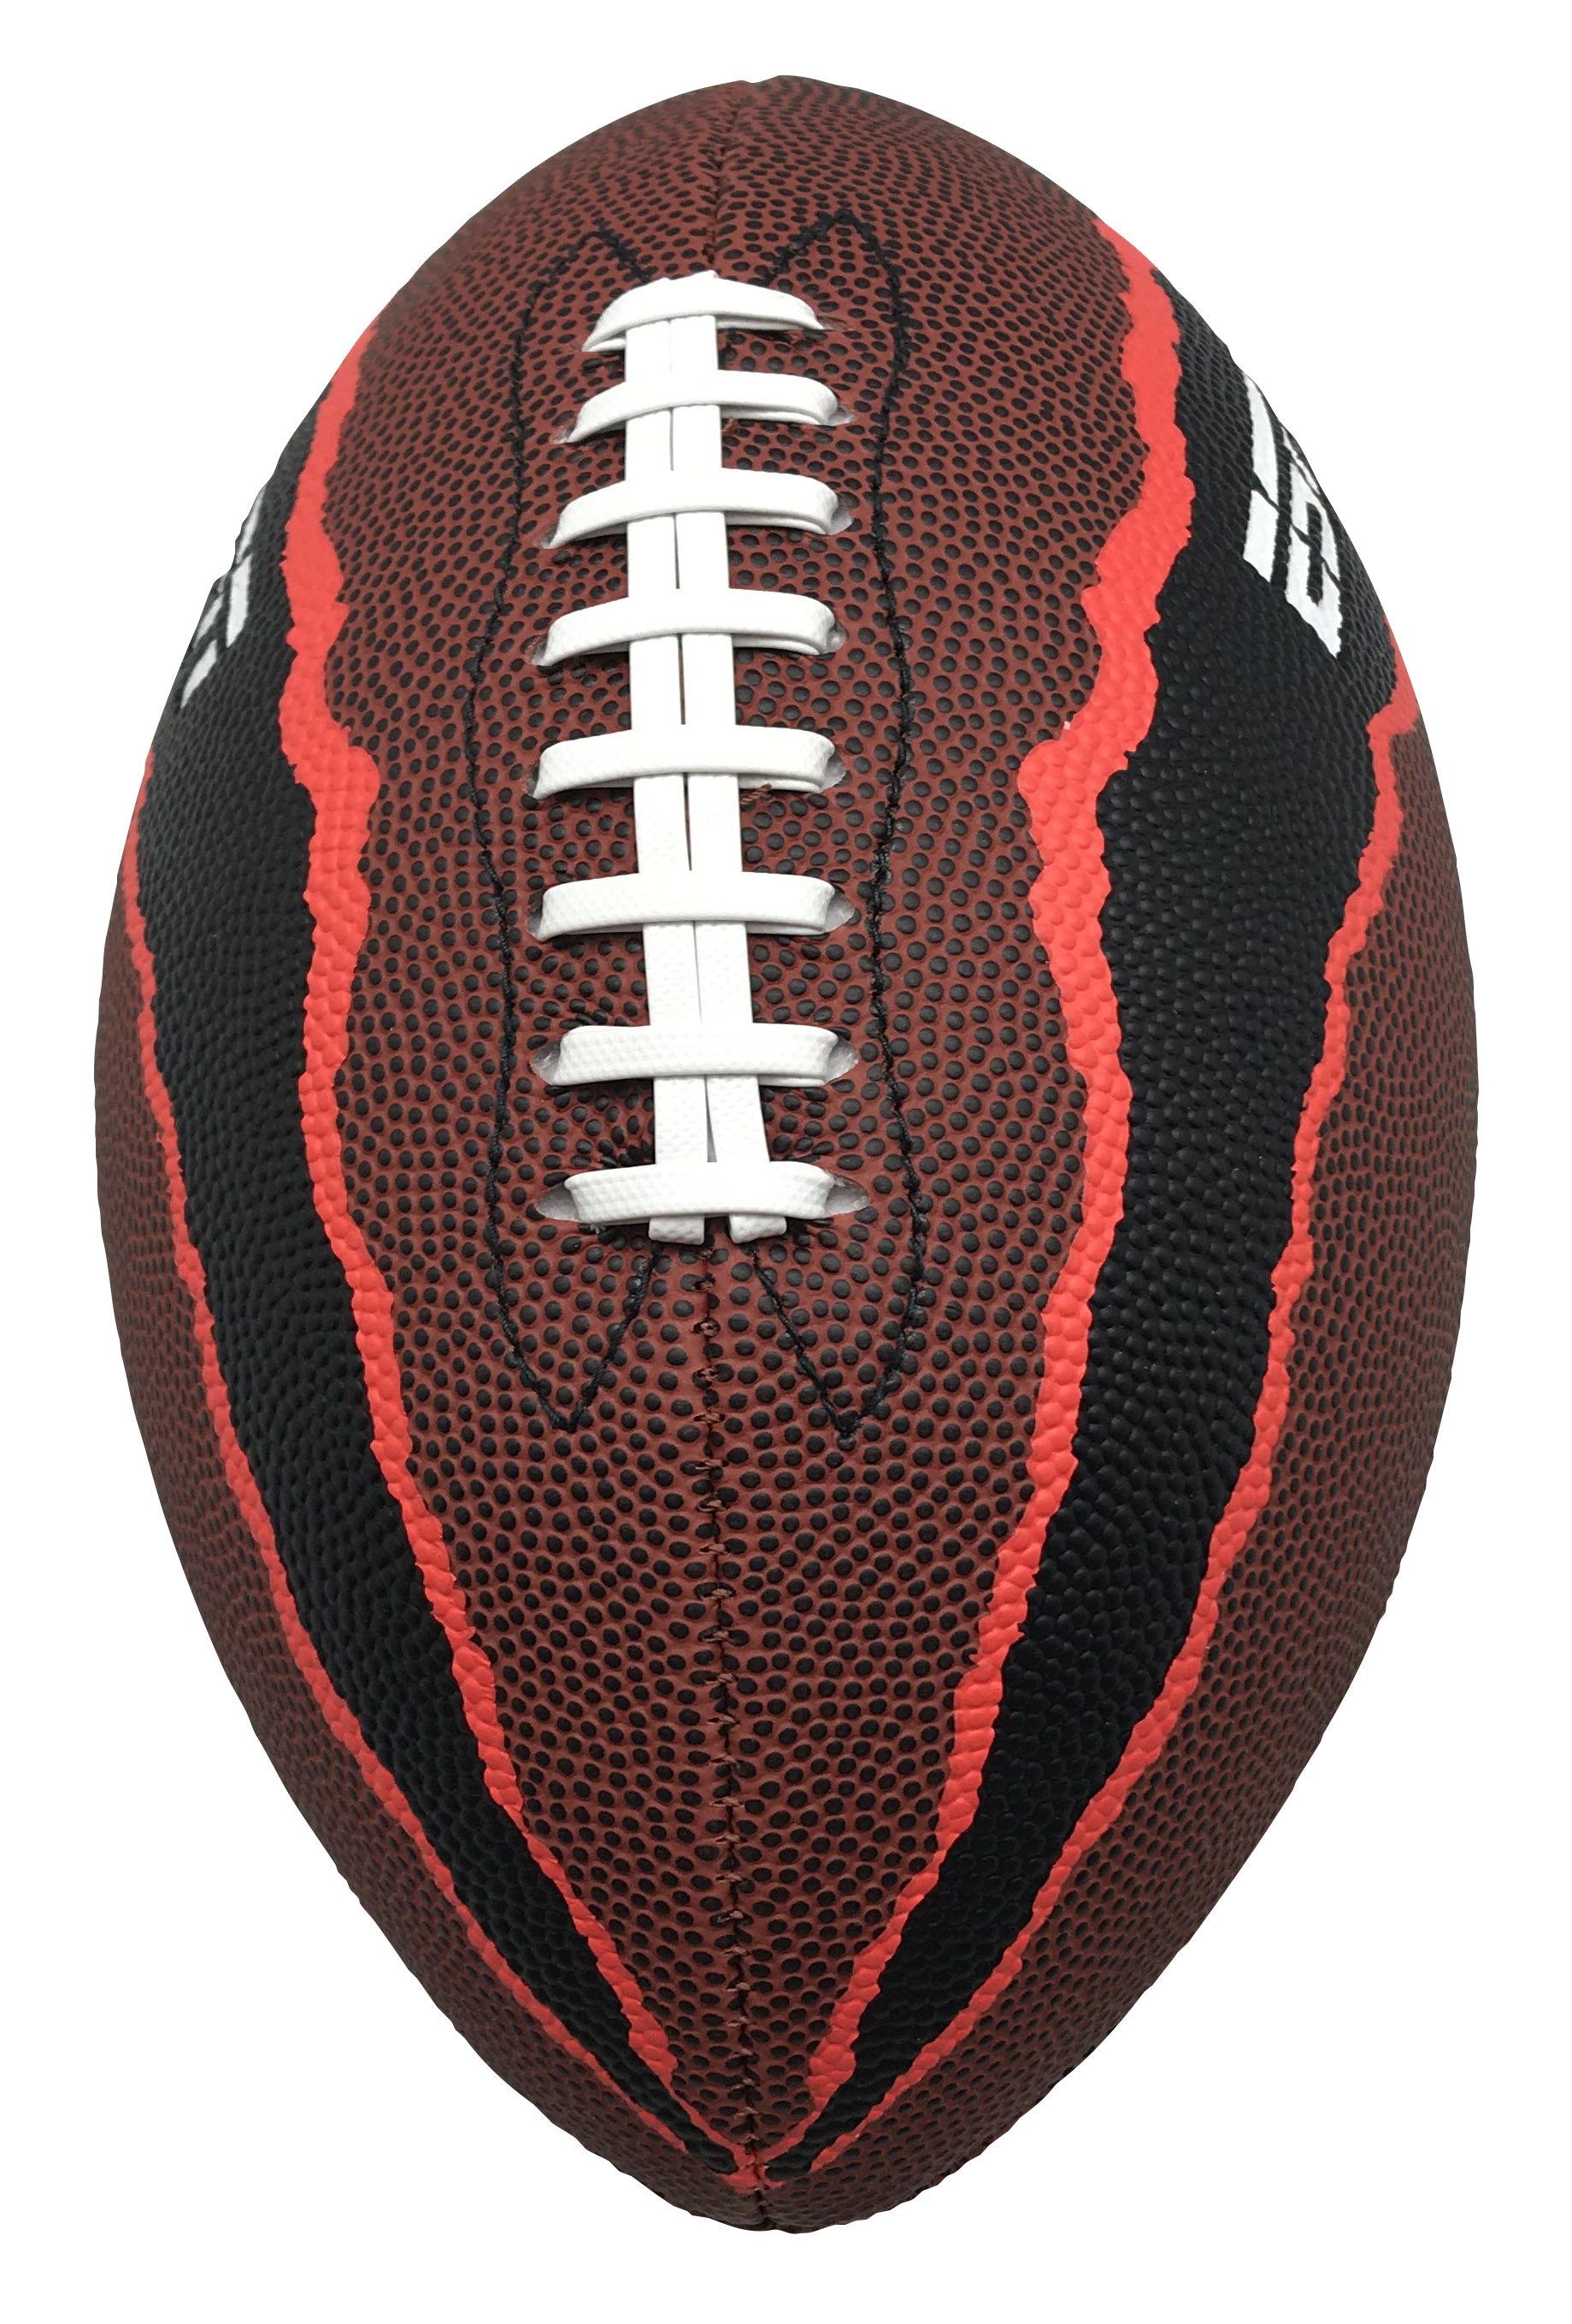 Franklin Sports Grip-Rite 100 Rubber Football, Junior